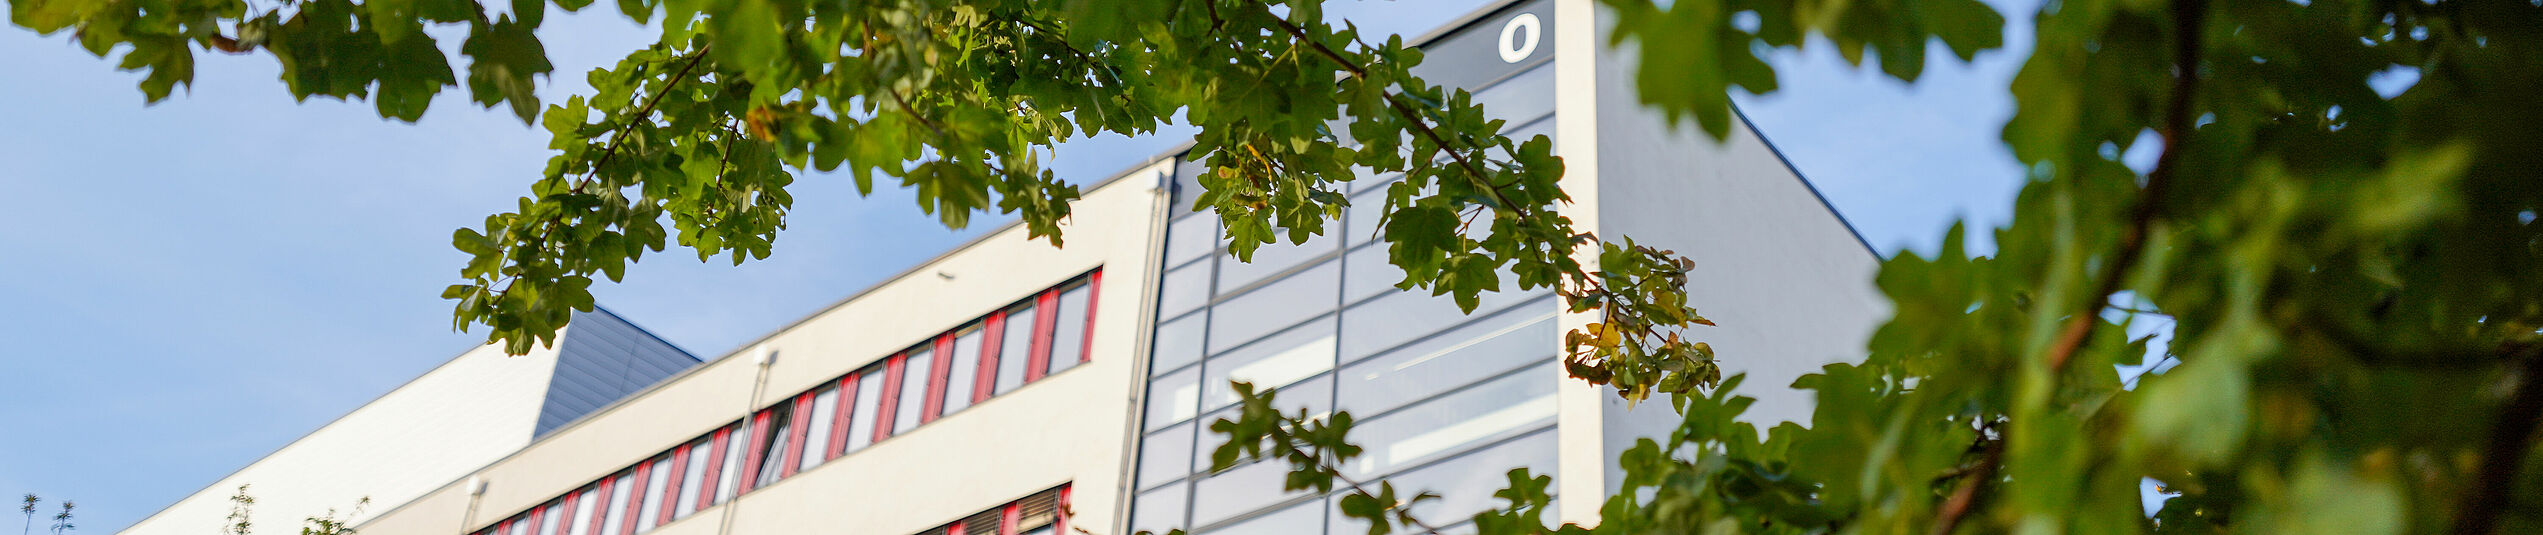 Building O of Paderborn University.